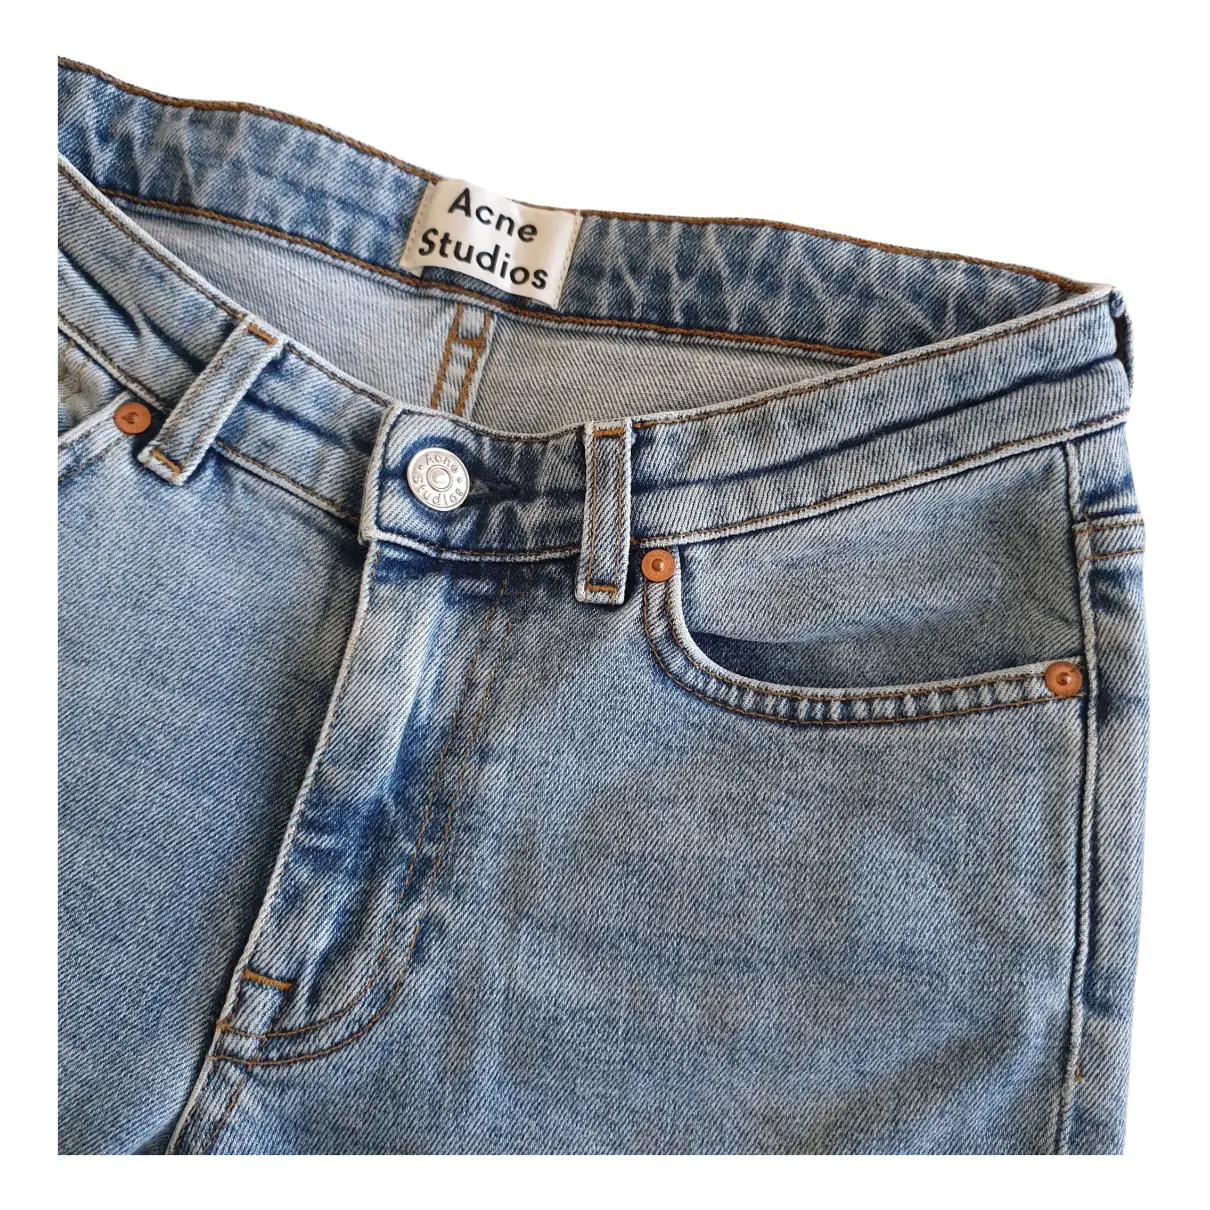 Buy Acne Studios Row straight jeans online